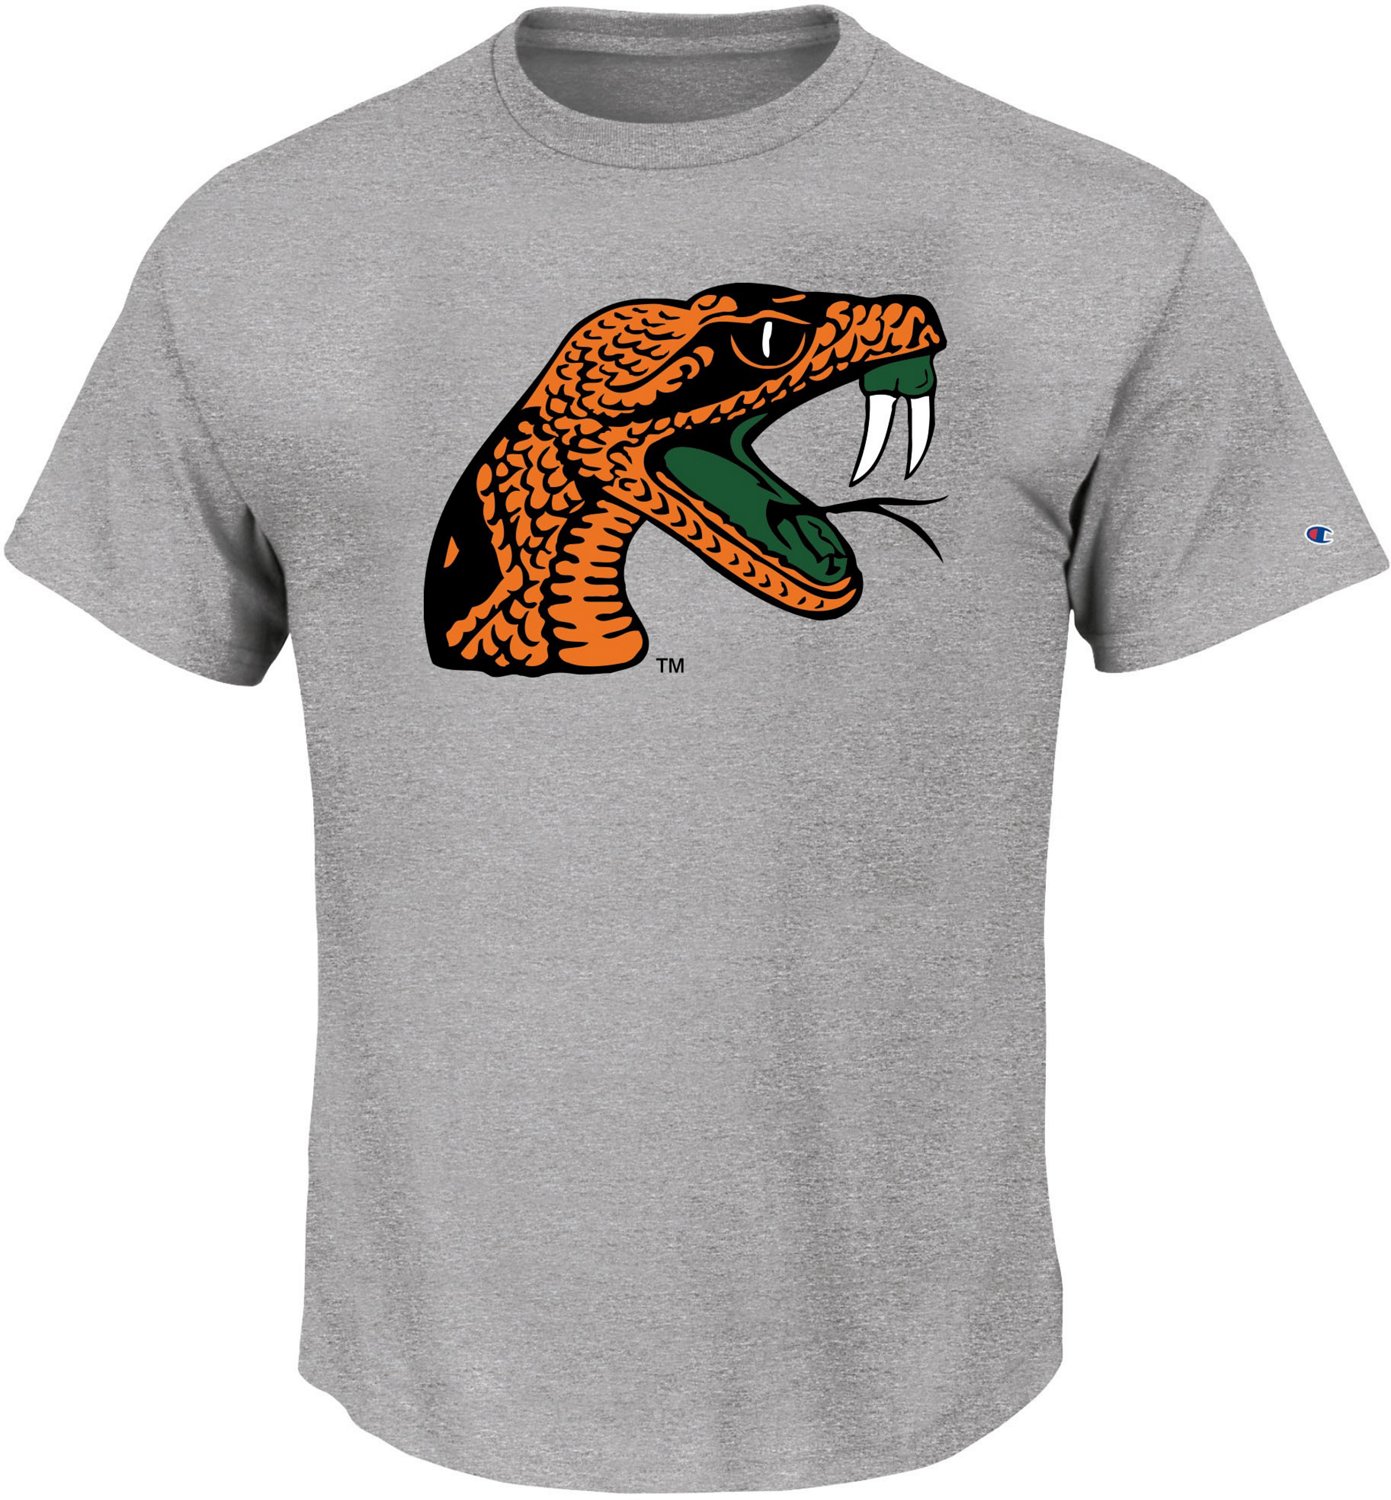 Men's Champion Gray Memphis Tigers Football Jersey T-Shirt